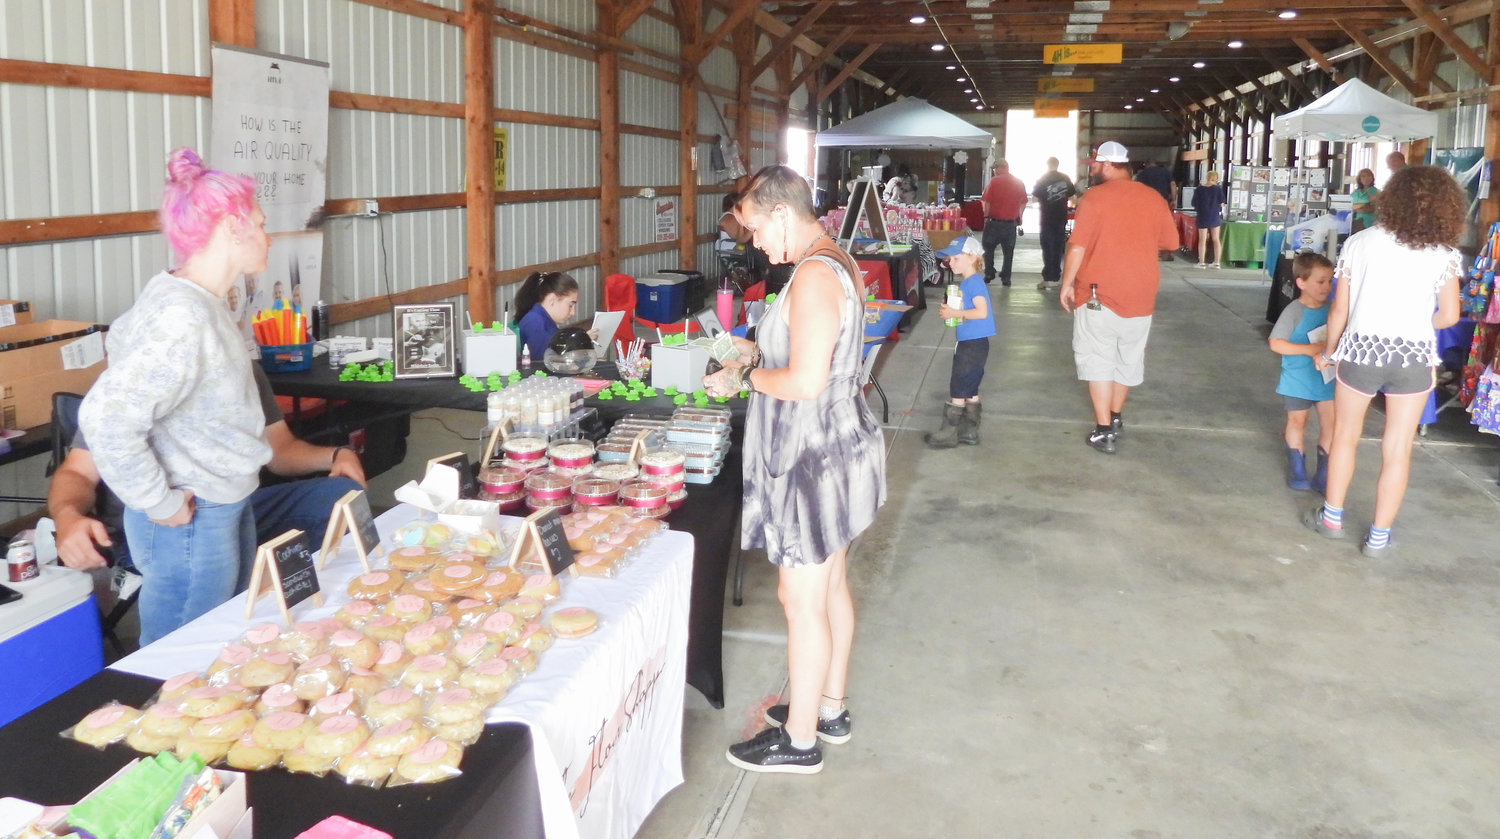 The Madison County Fair runs until July 10.